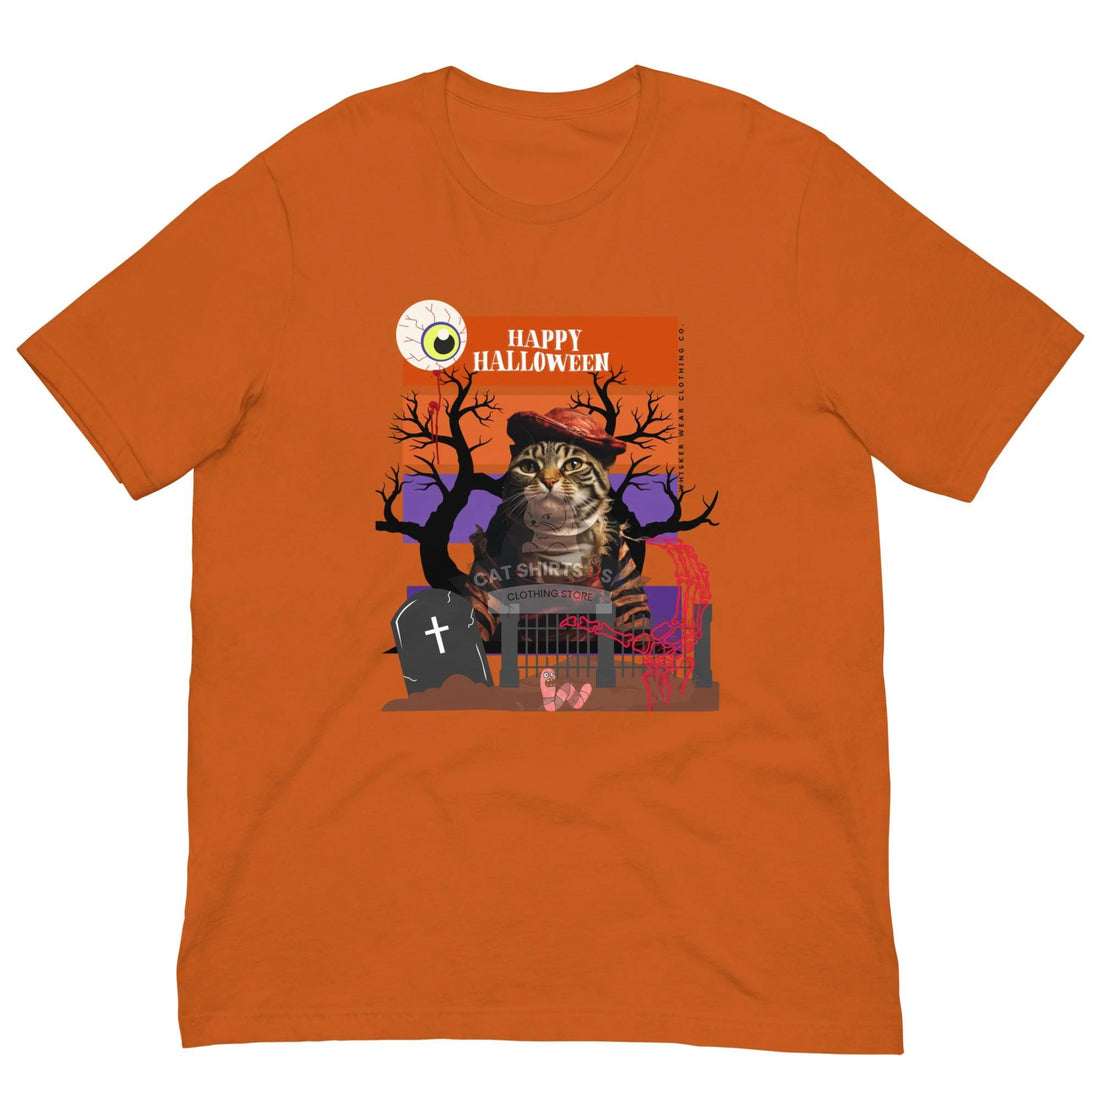 Happy Halloween 2 Cat Shirt - Cat Shirts USA